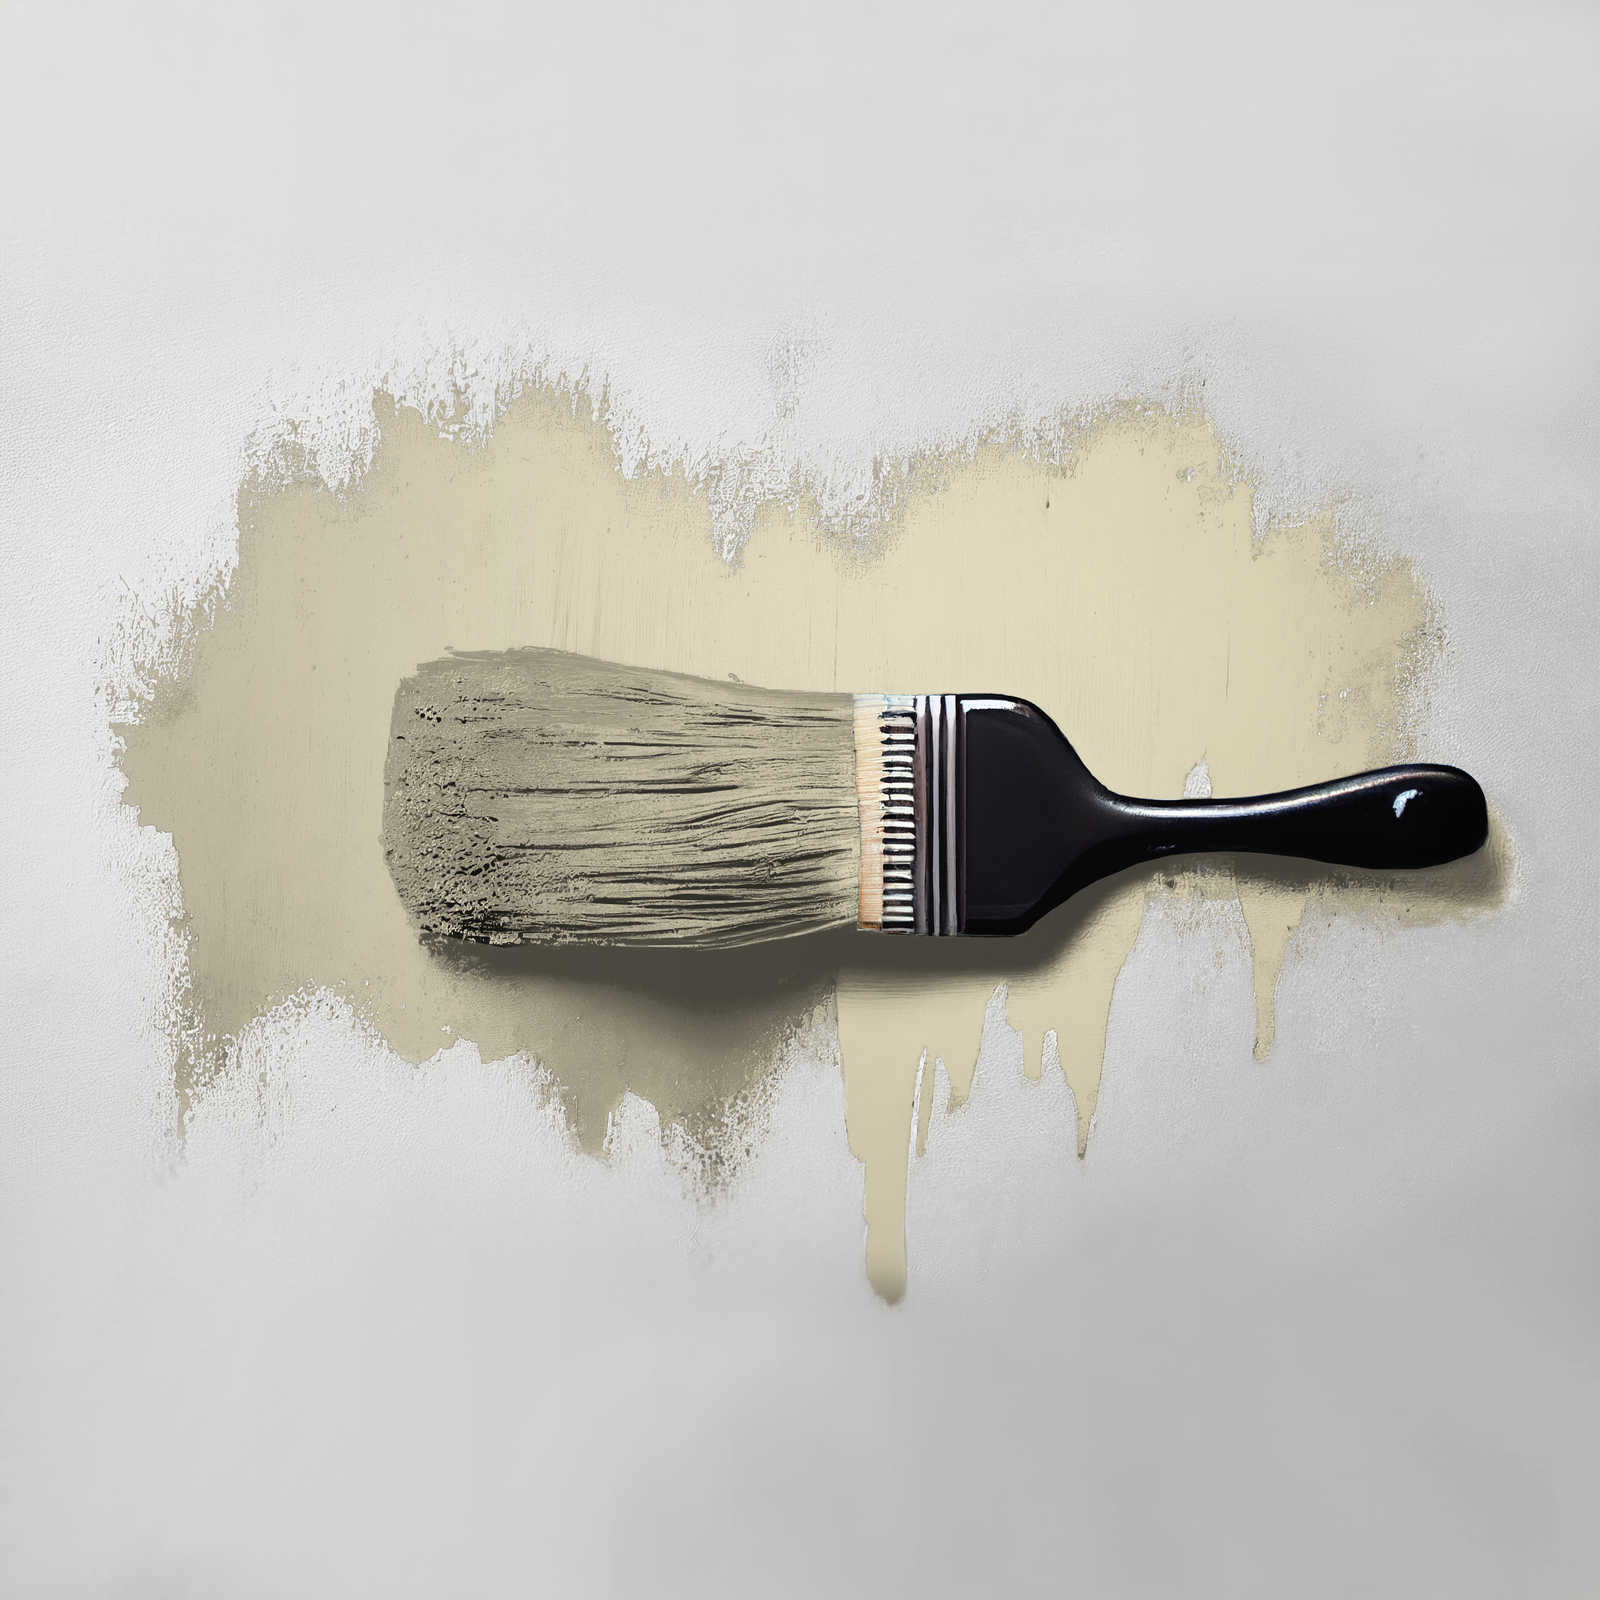             Peinture murale TCK4000 »Natural Mate« en beige clair verdâtre – 2,5 litres
        